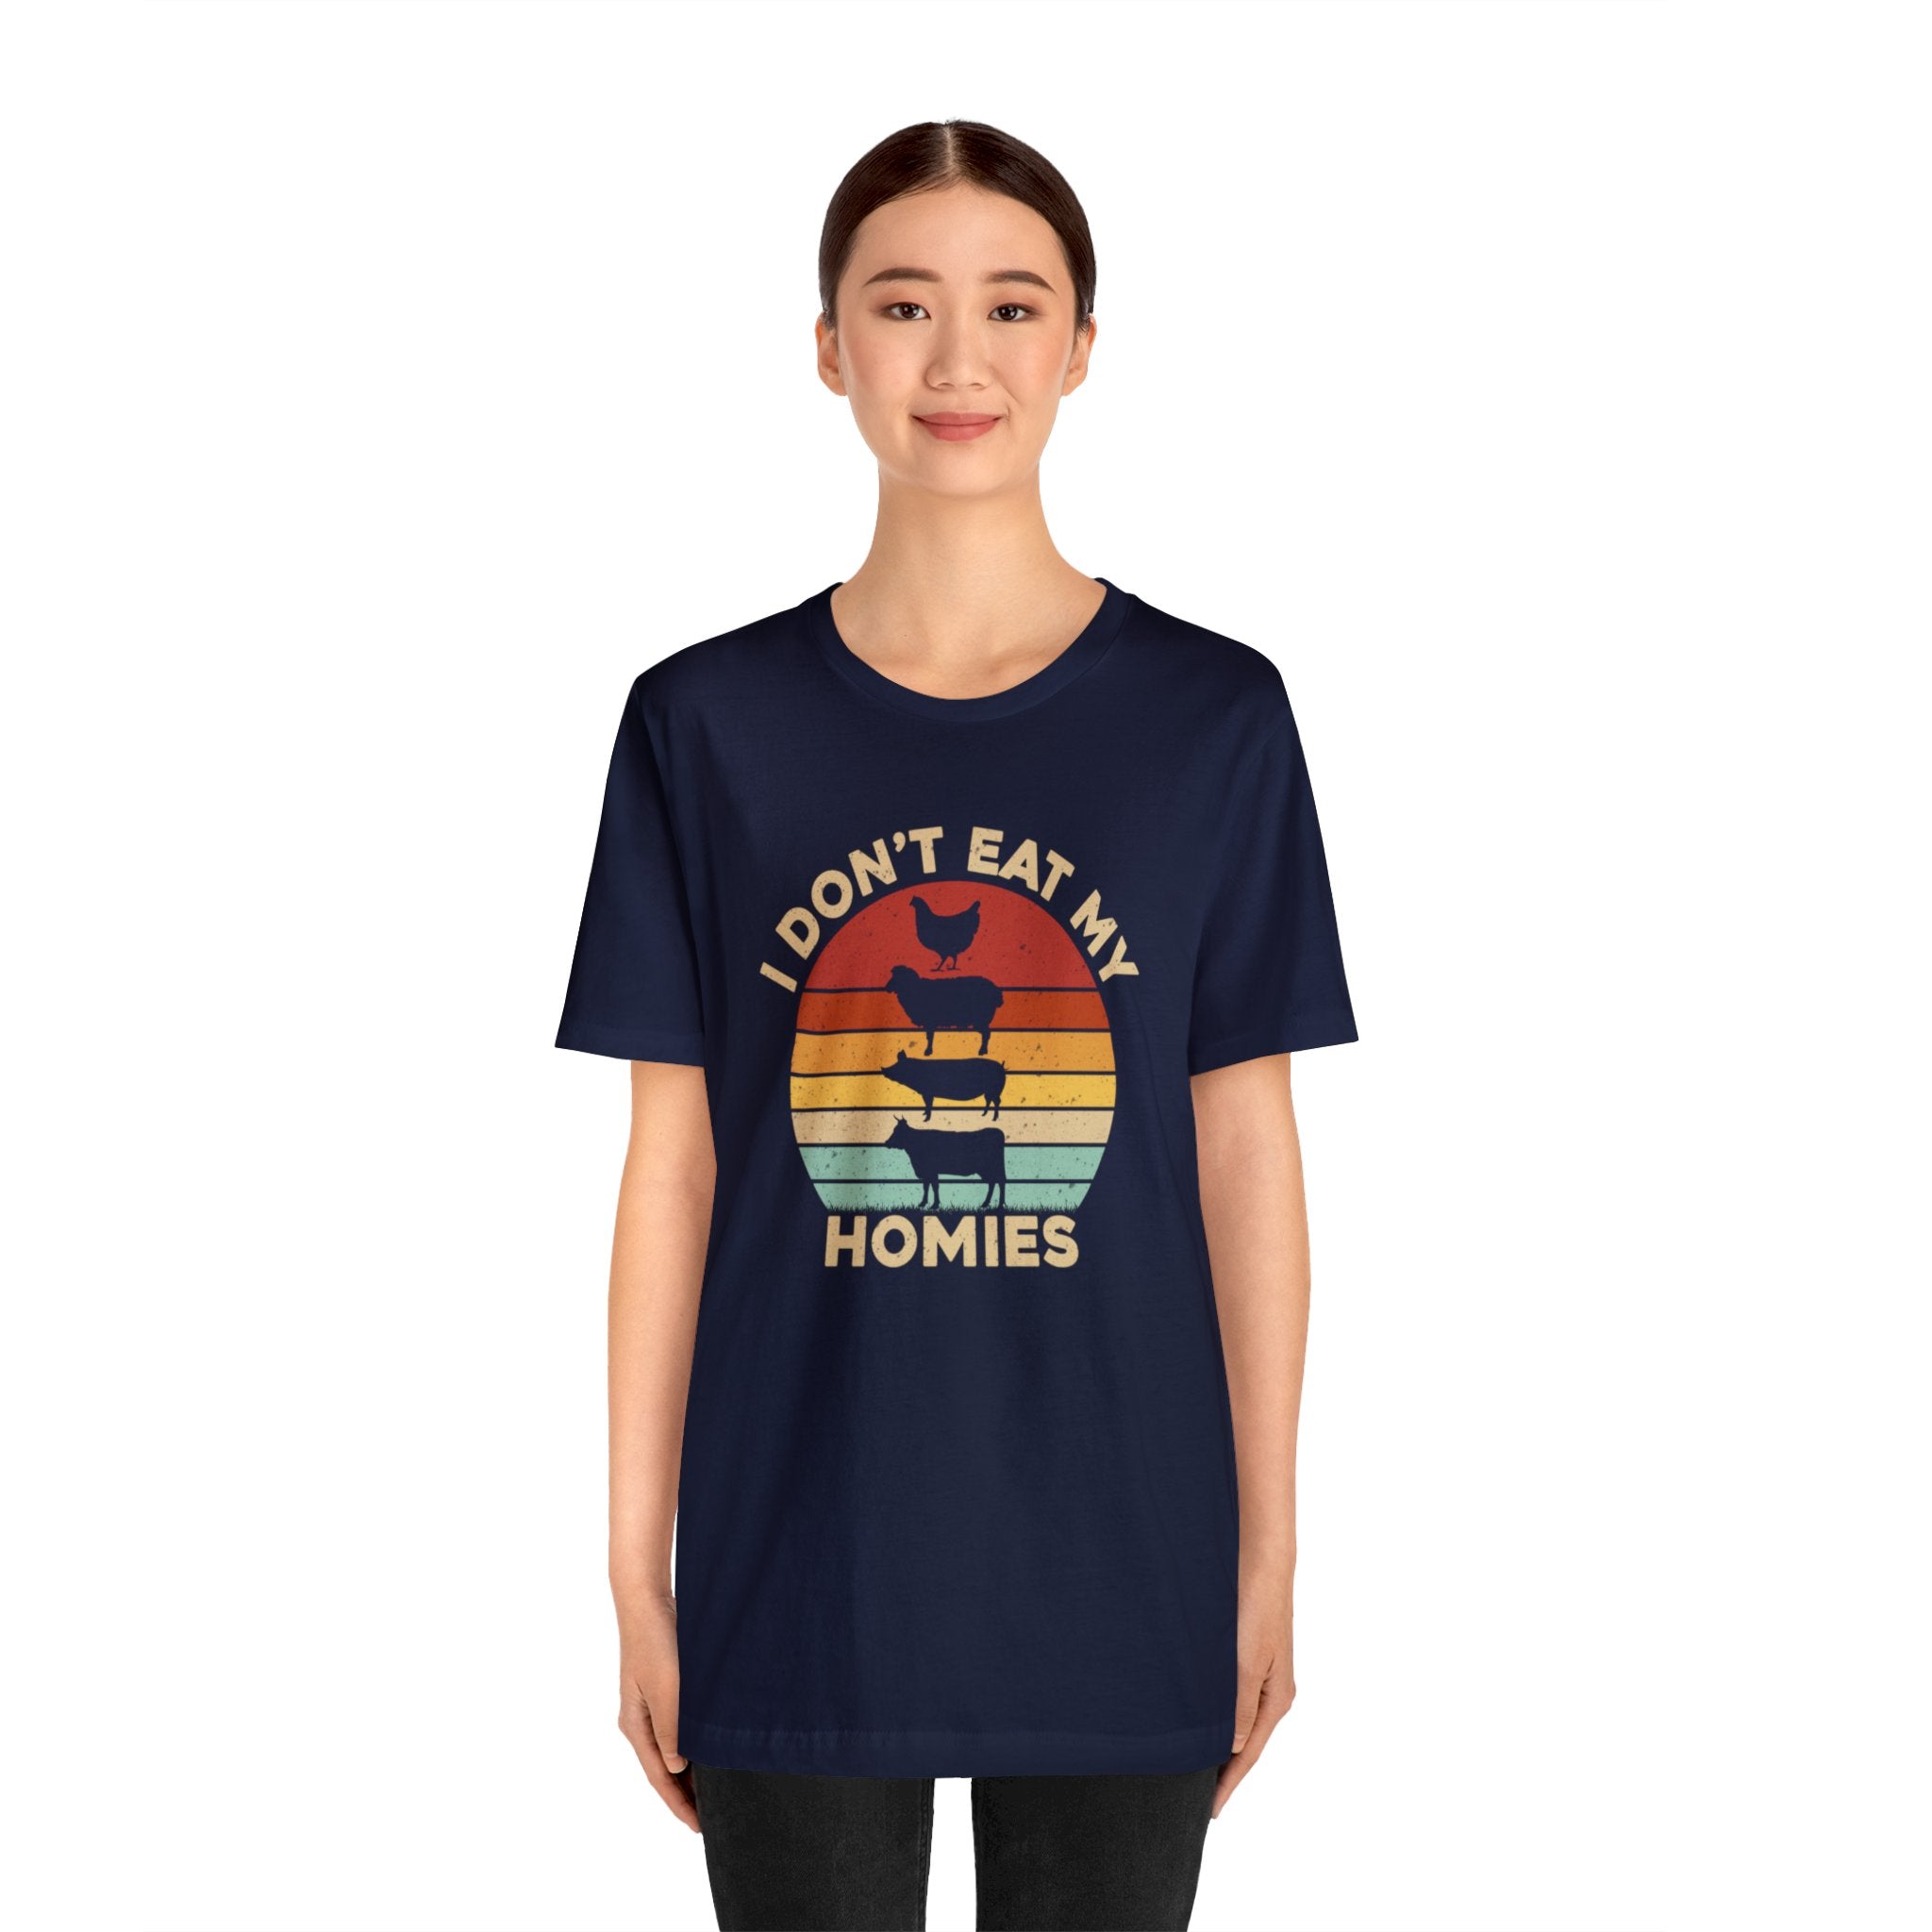 "I Don't Eat My Homies" Vegan Funny Unisex Jersey Short Sleeve Tee - Humorous Plant-Based Lifestyle Statement Shirt